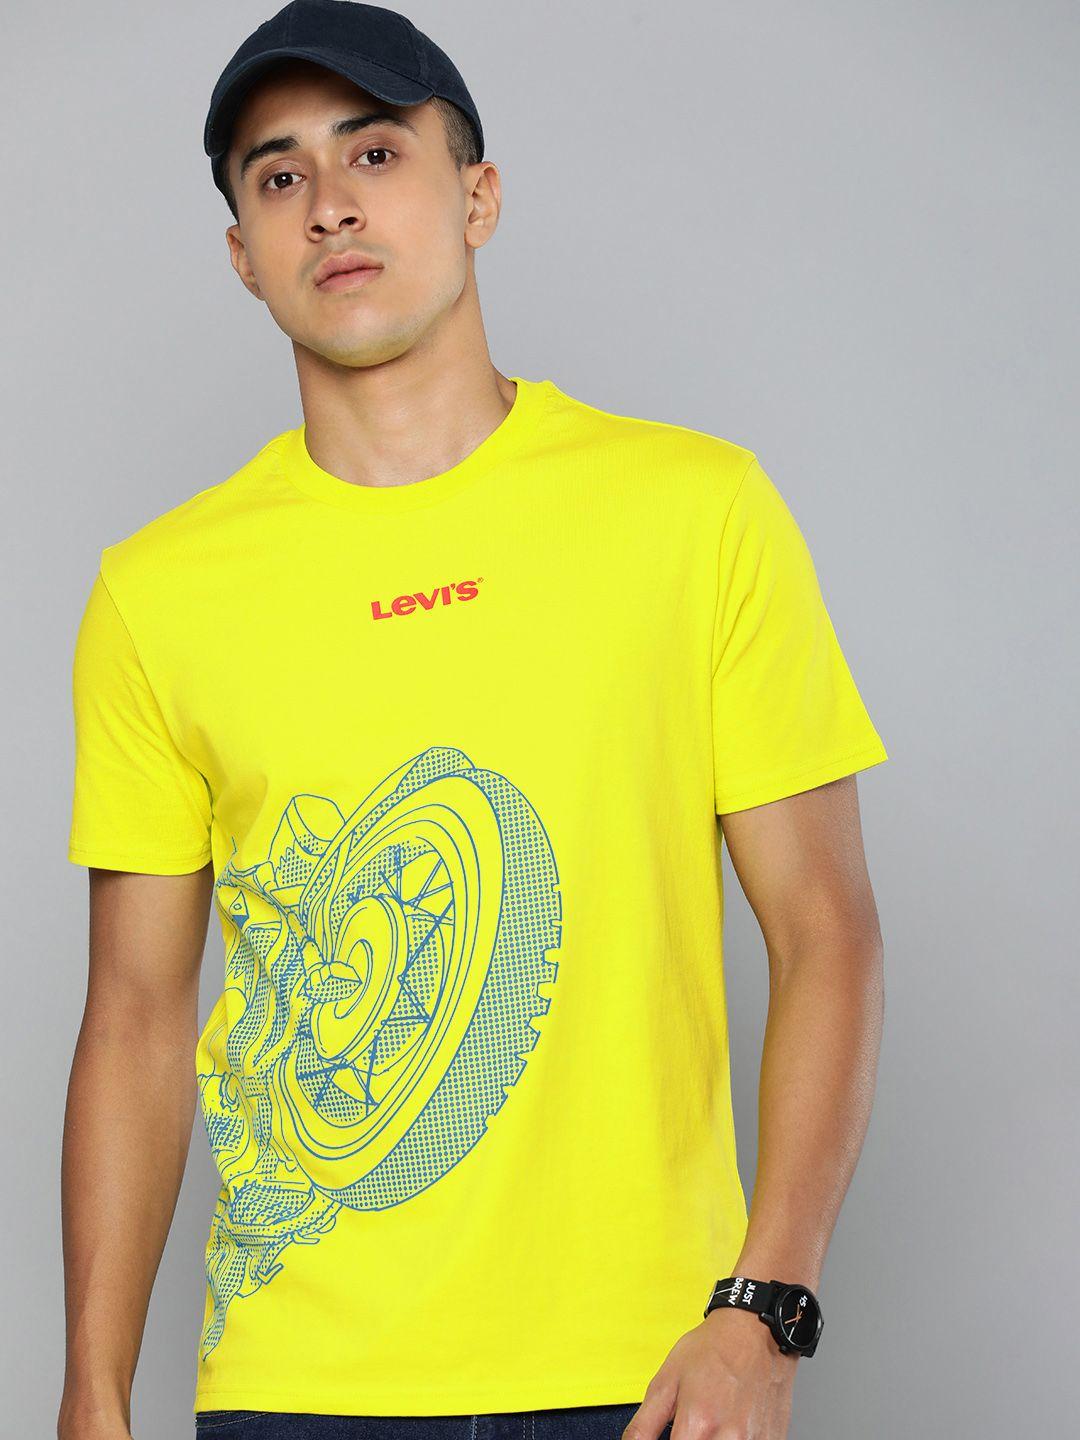 levis round neck graphic printed pure cotton t-shirt